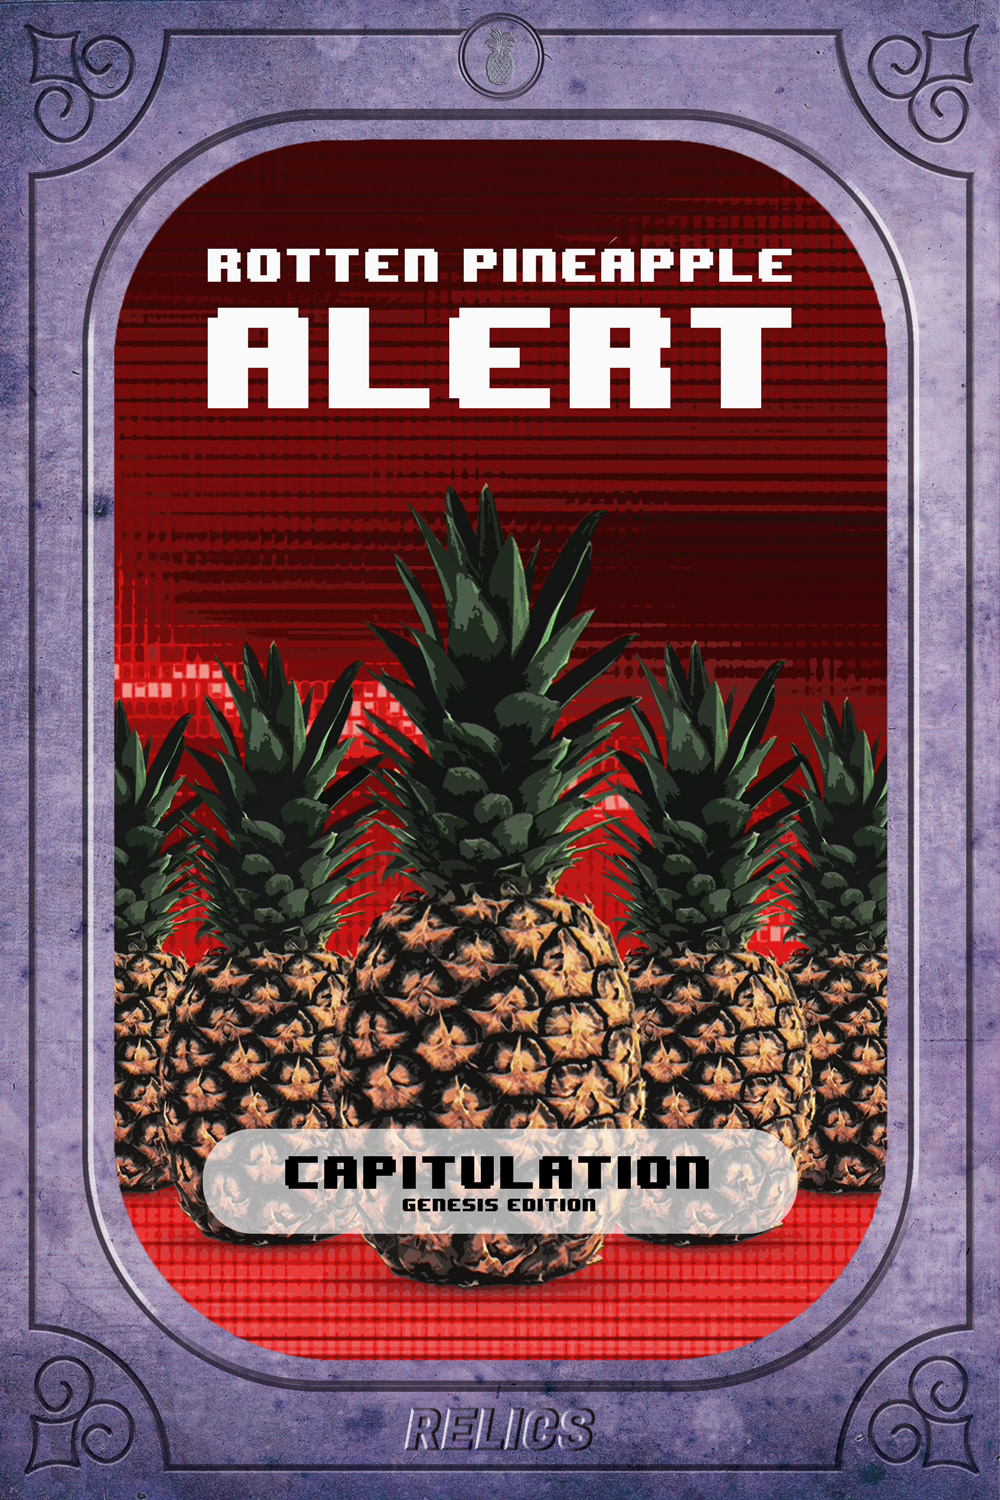 Rotten Pineapple Alert